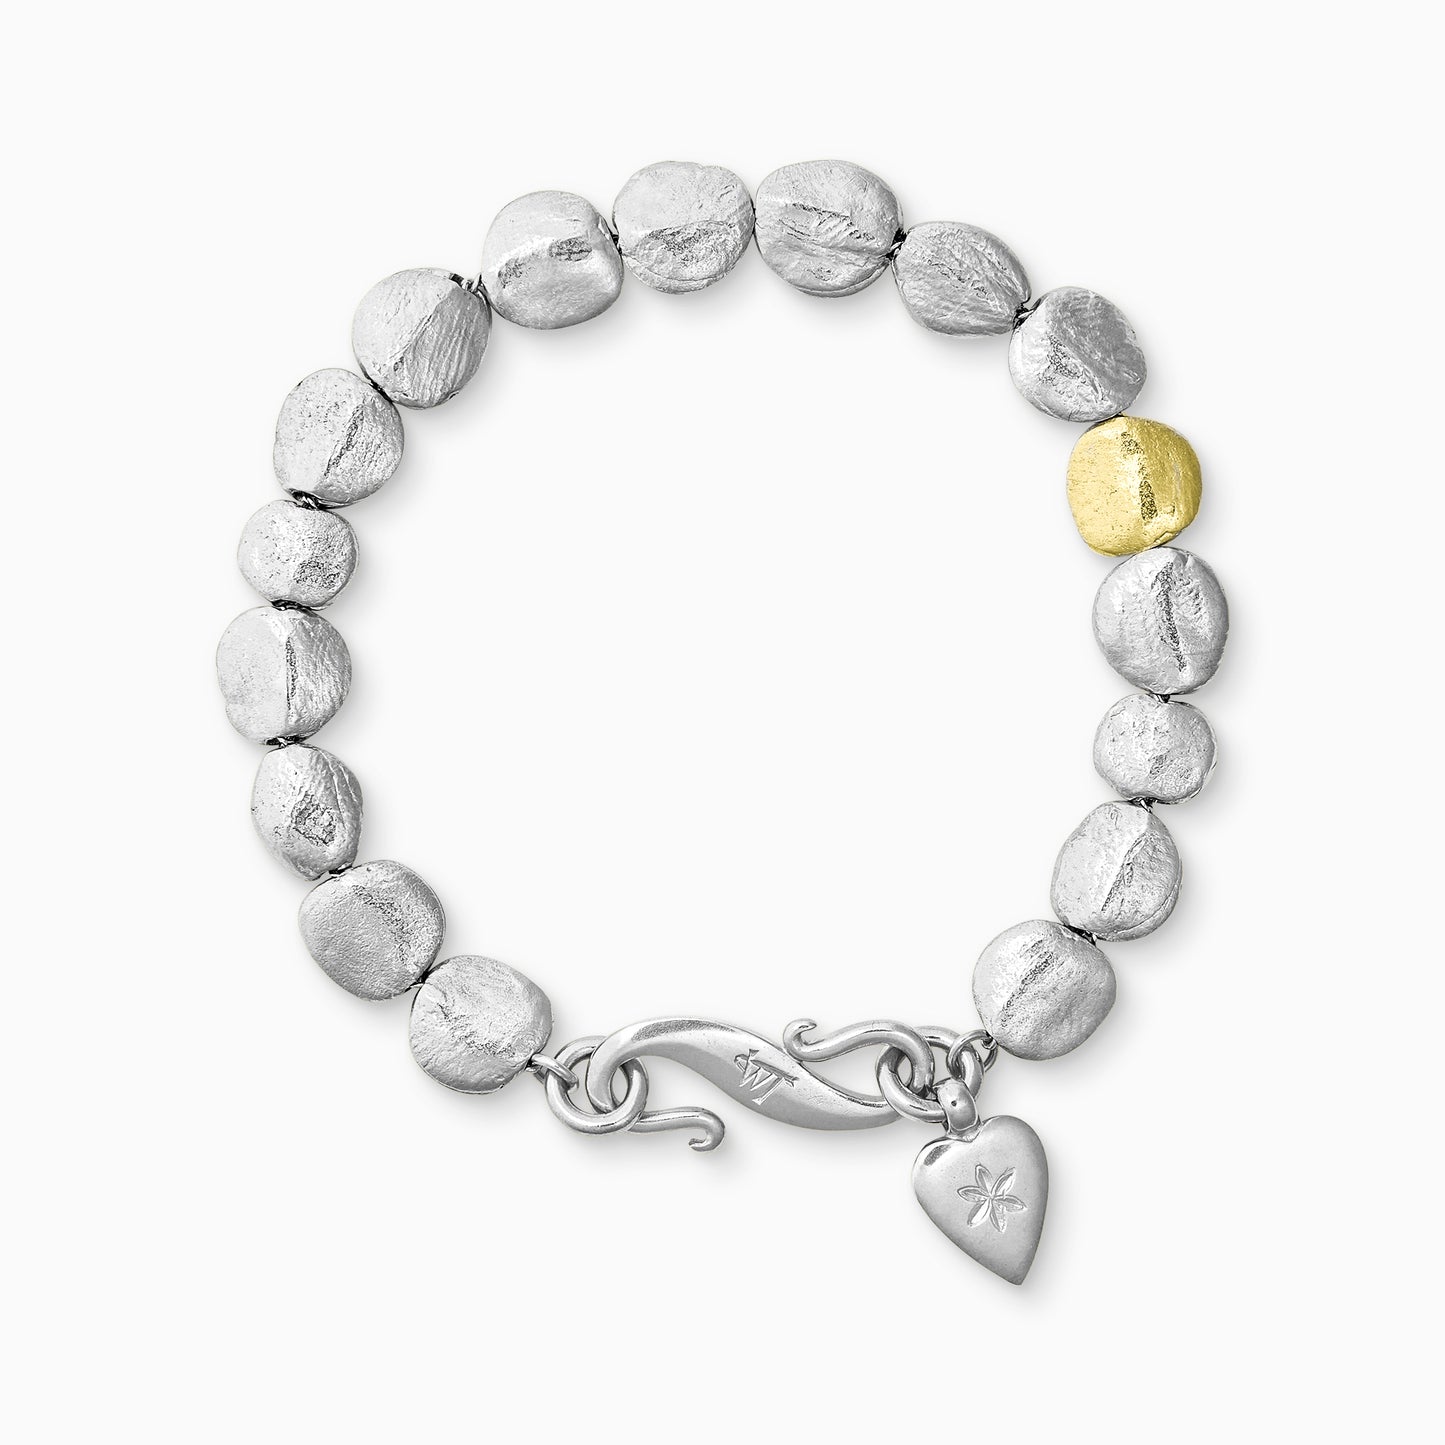 Mystic bead bracelet